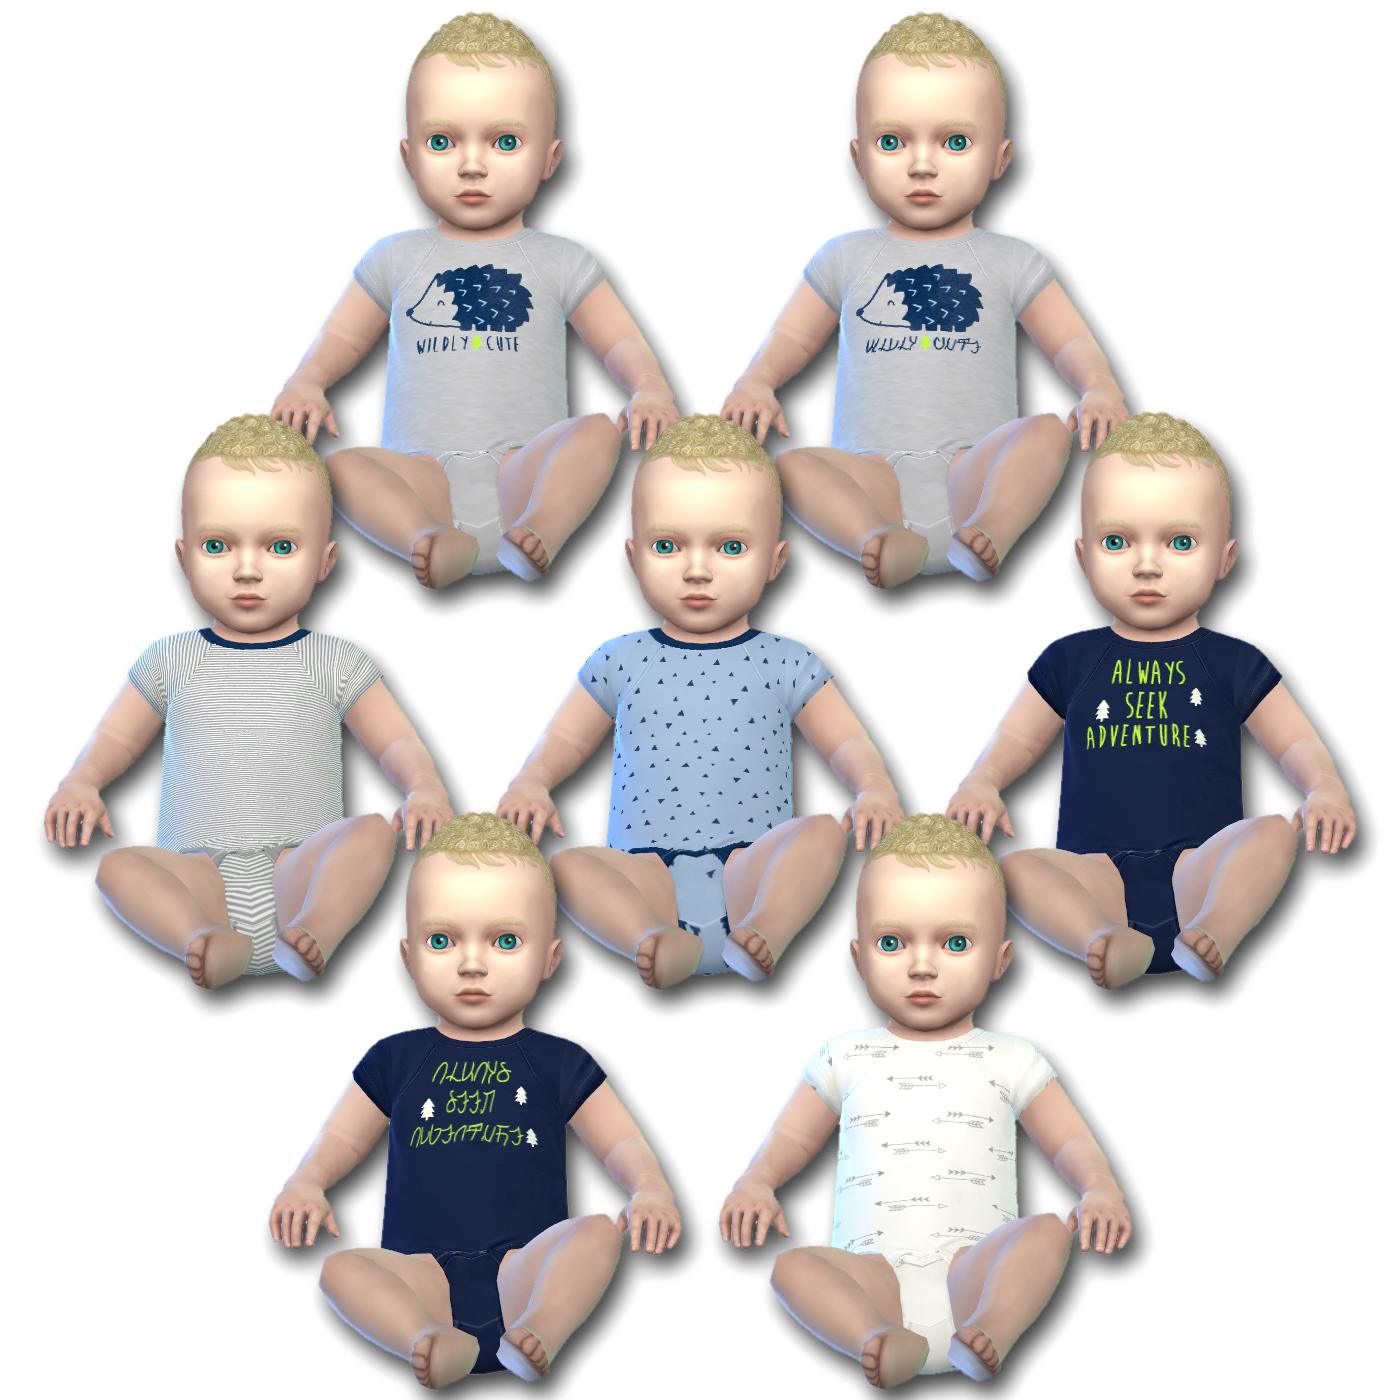 Infant Hedgehog Onesies - The Sims 4 Create a Sim - CurseForge